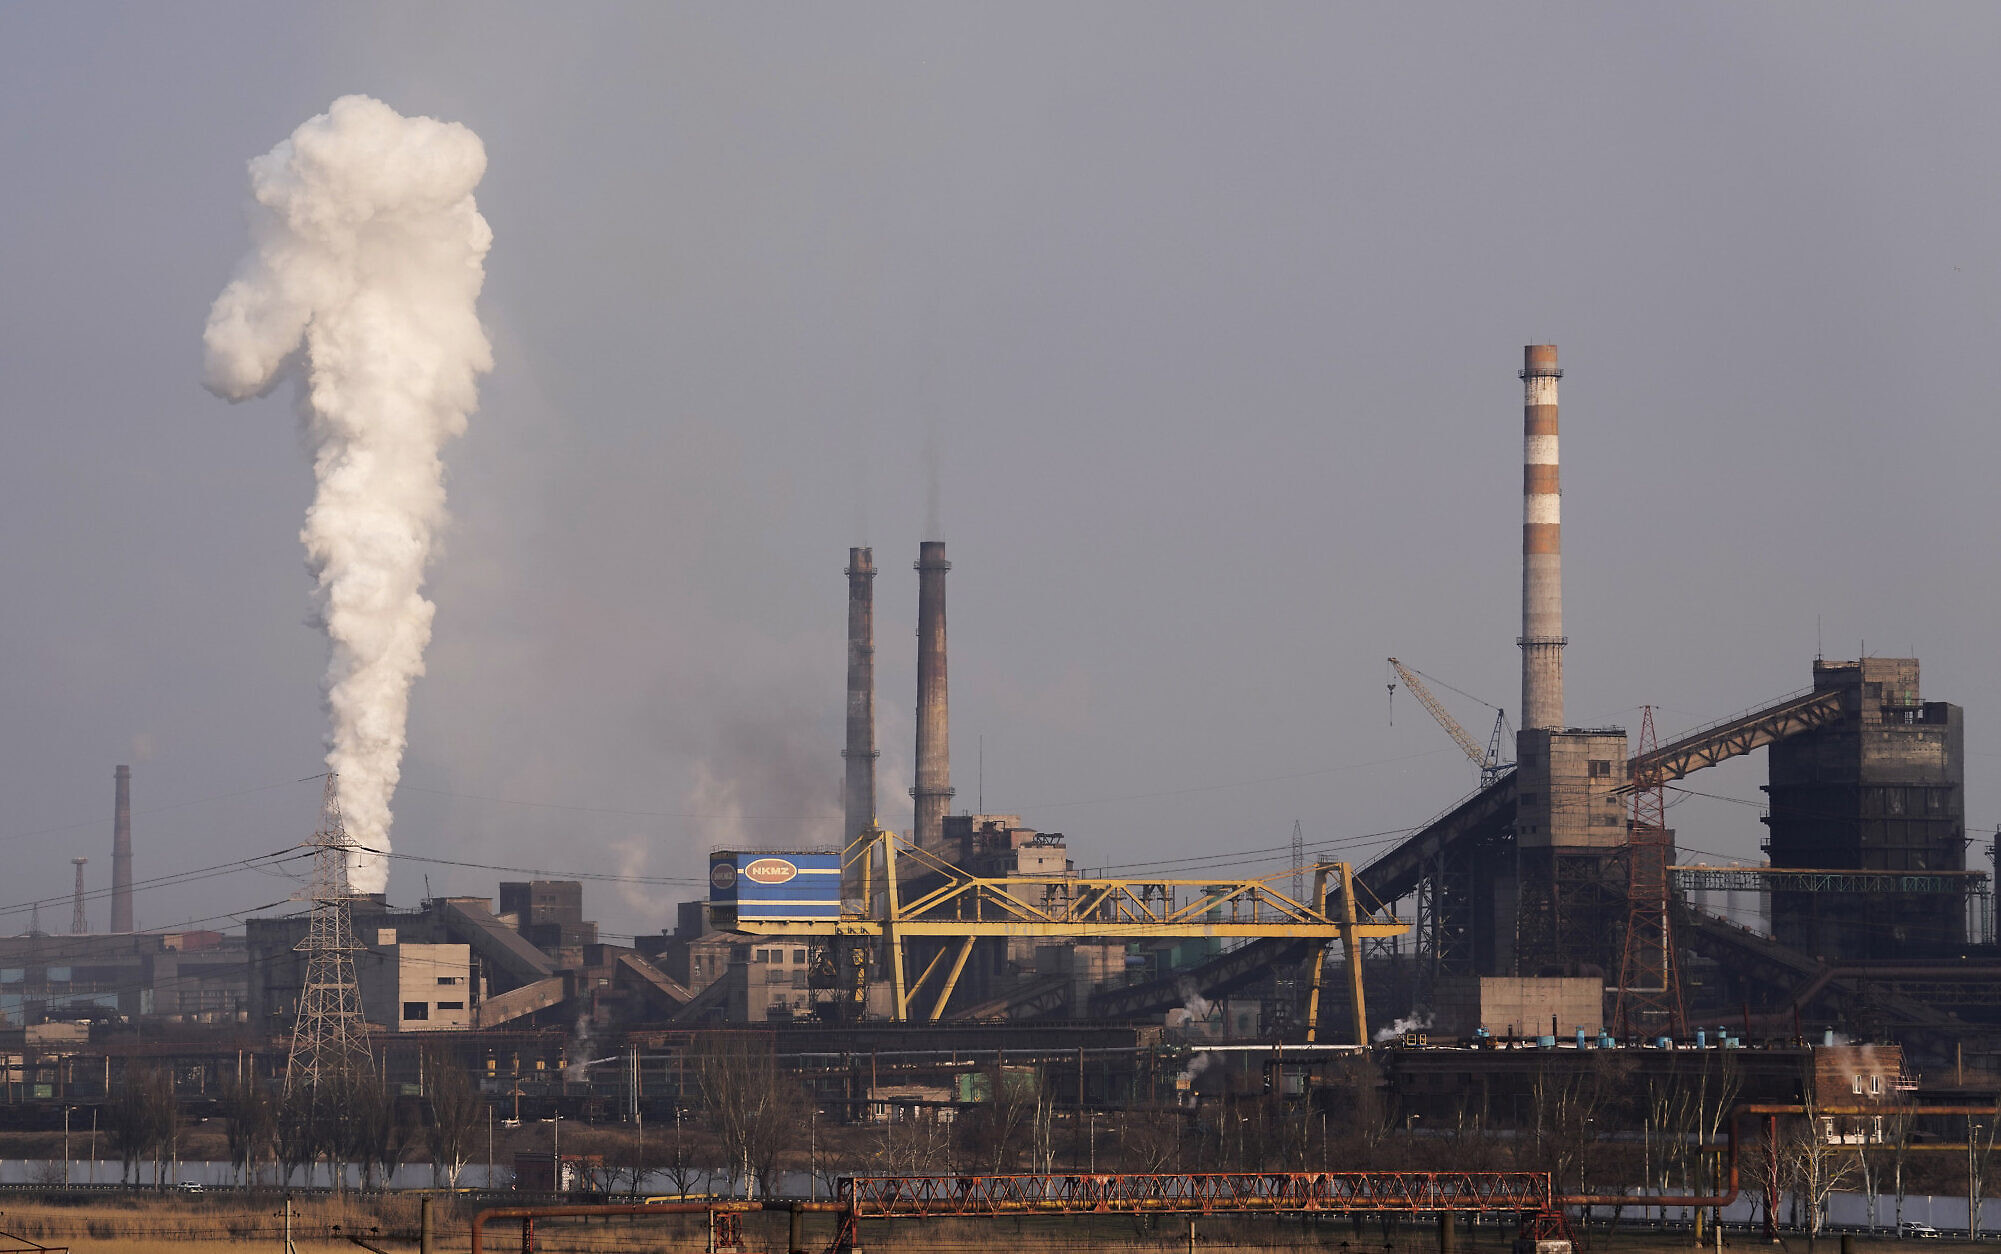 Ukraine evacuates civilians from steel plant under siege